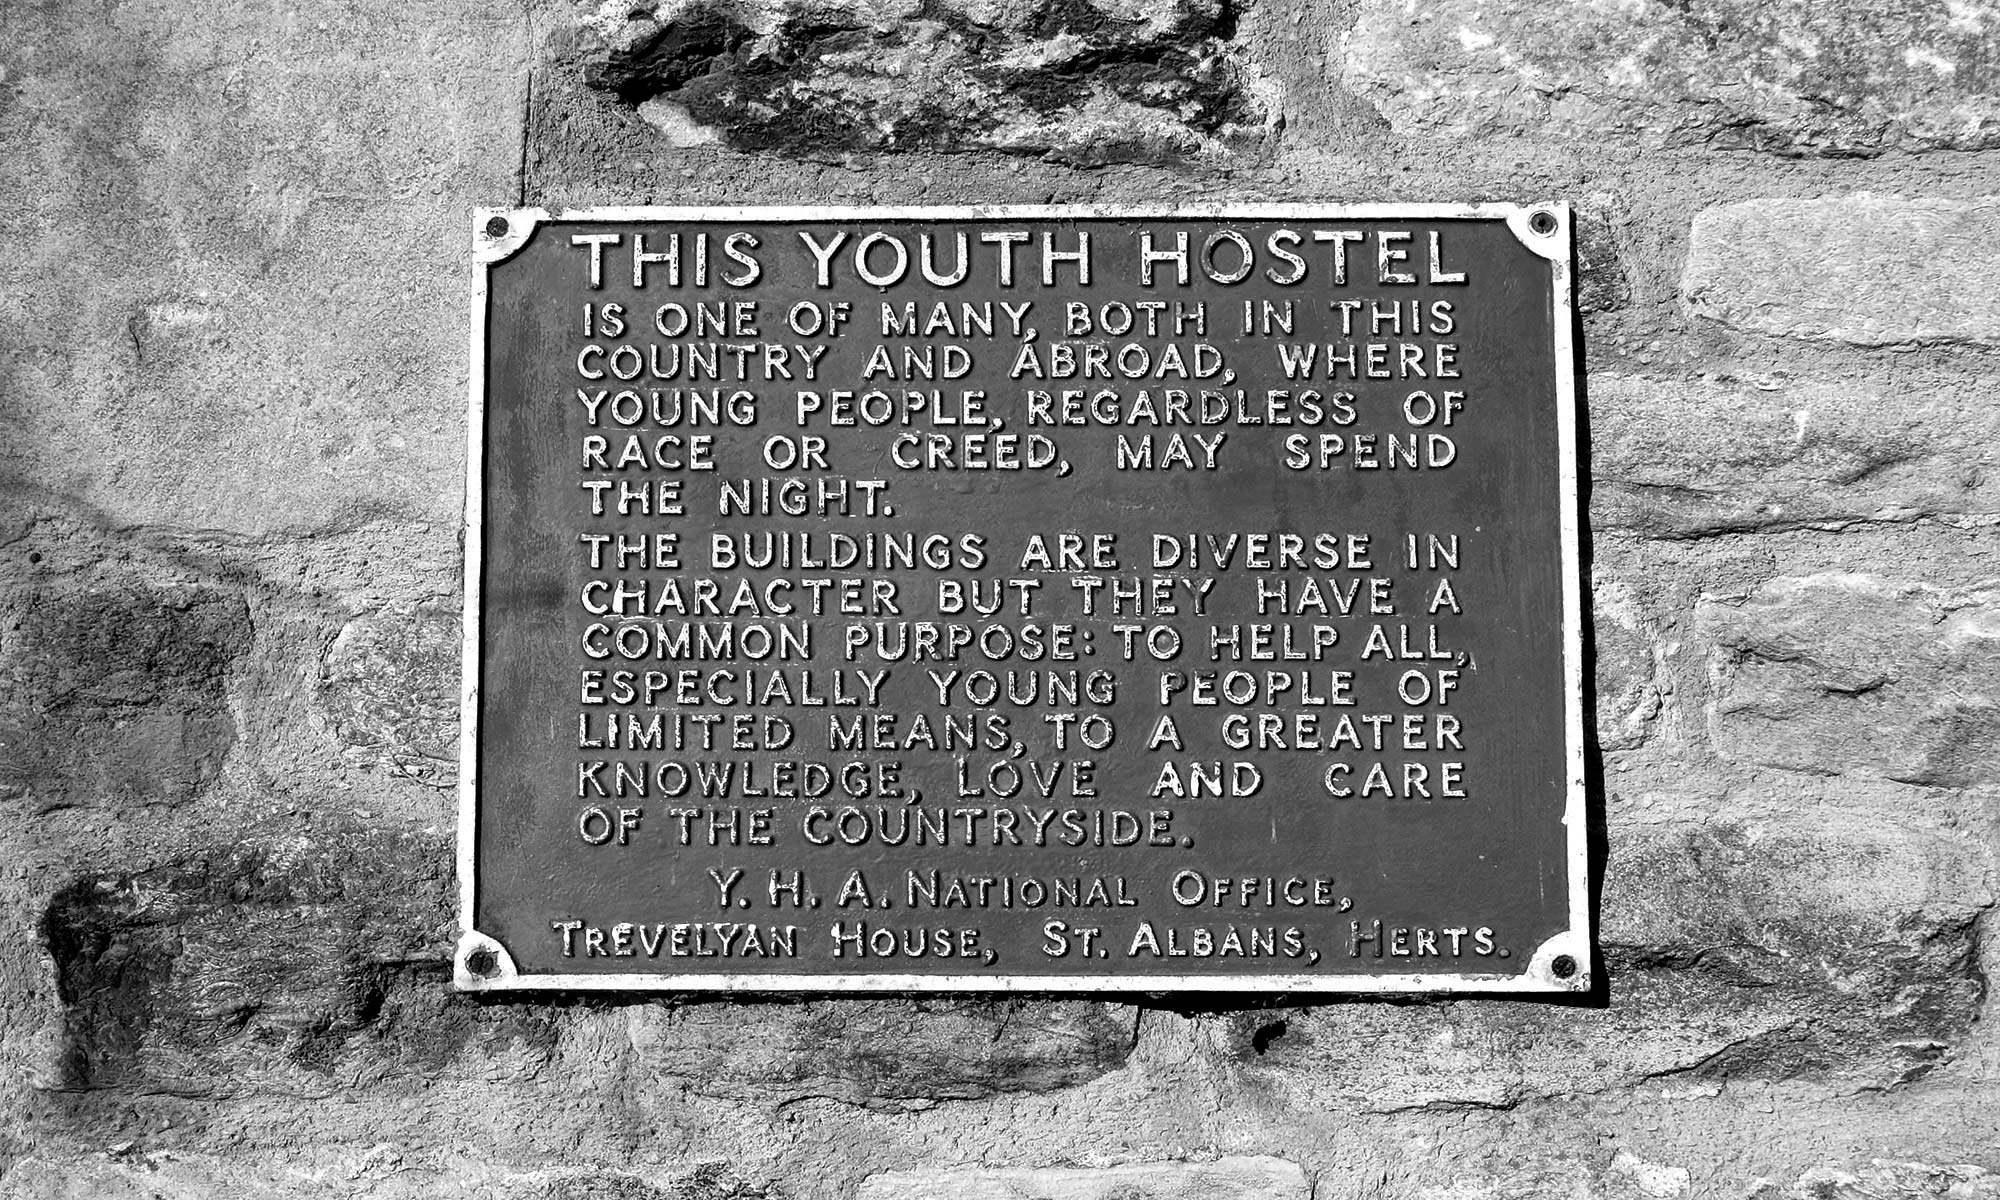 Youth Hostel association plaque